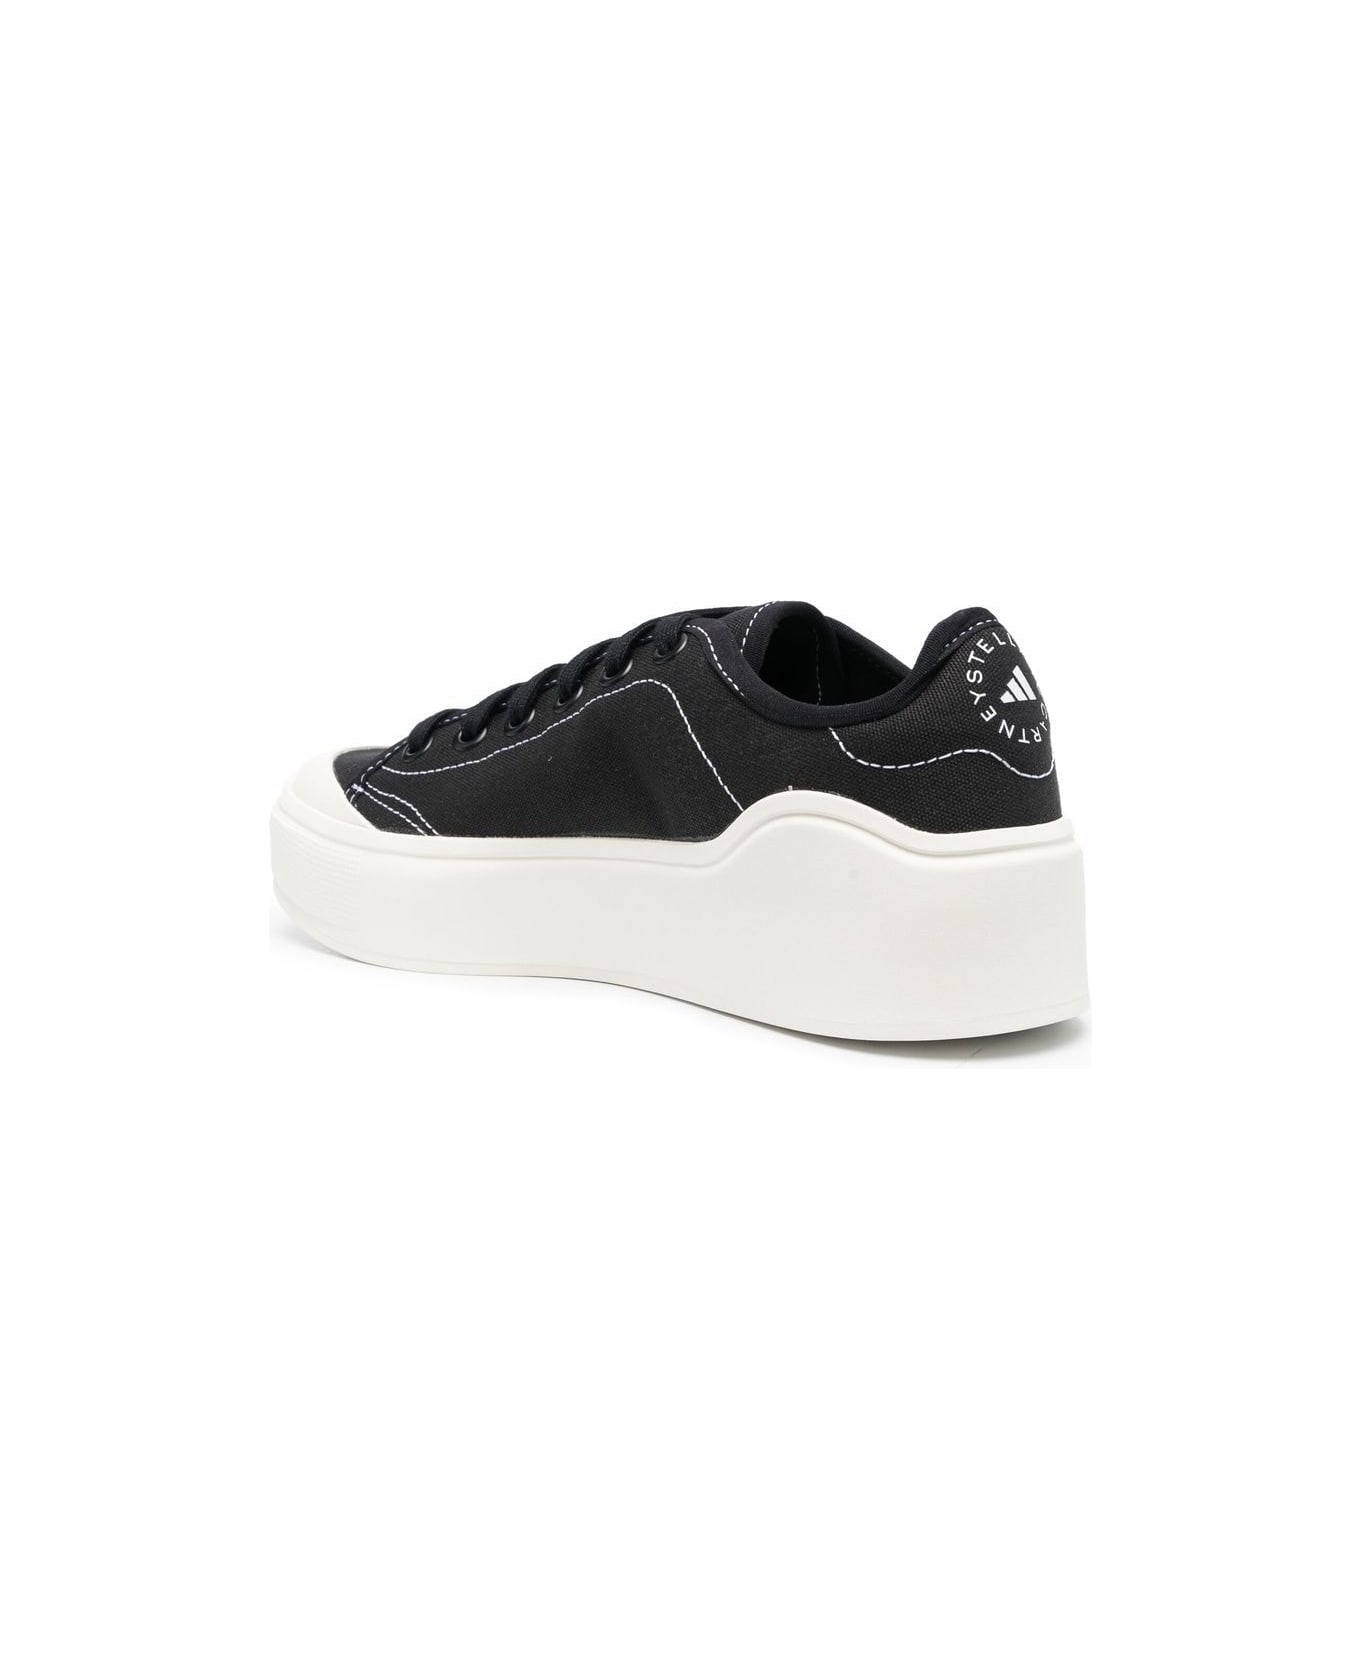 Adidas by Stella McCartney Asmc Court Sneakers - Cblack Cblack Owhite